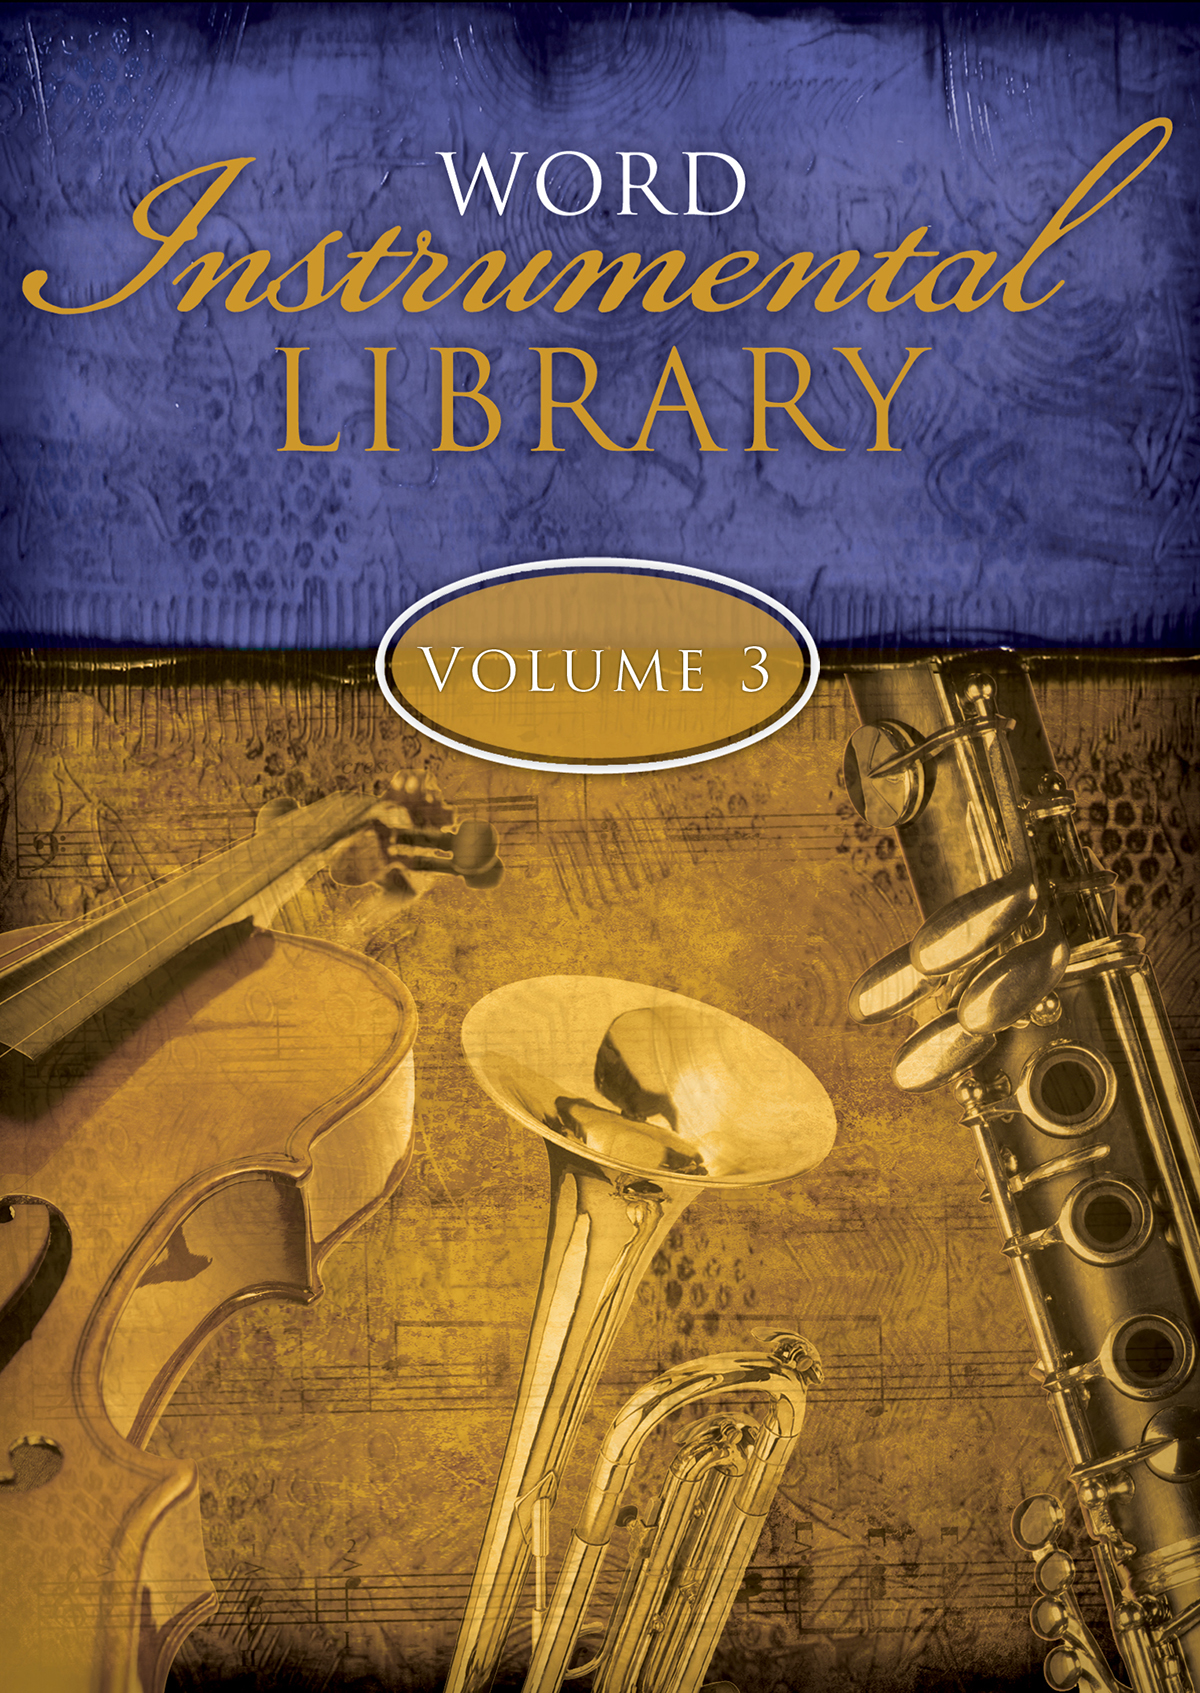 Word Instrumental Library, Volume 3